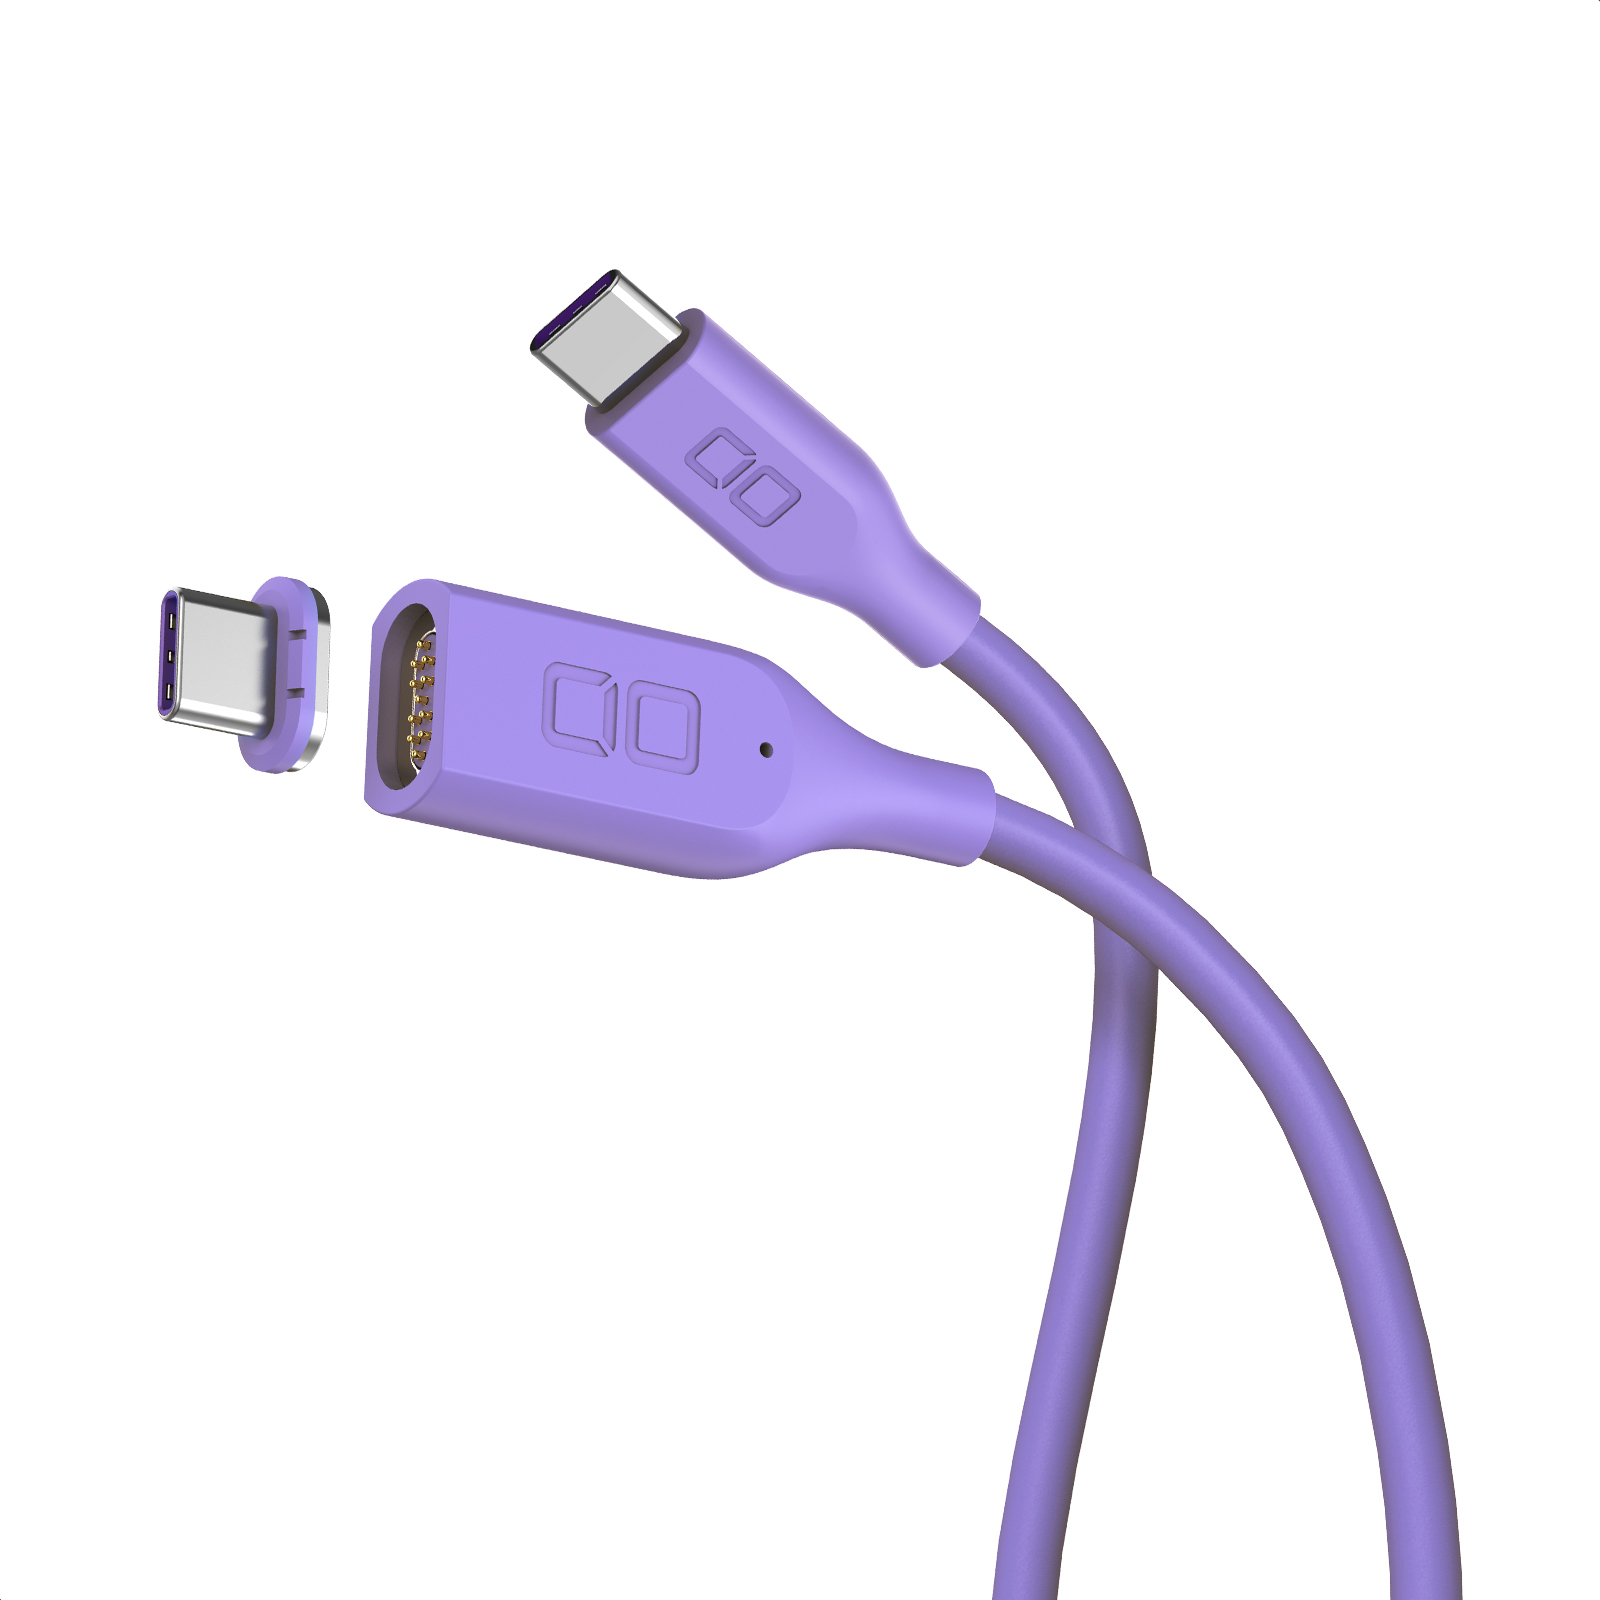 USB Type-C USB C ケーブル 1m 充電ケーブル マグネット付き 急速充電 MAX 2.4A タイプ C 収納 持ち運び スマートフォン